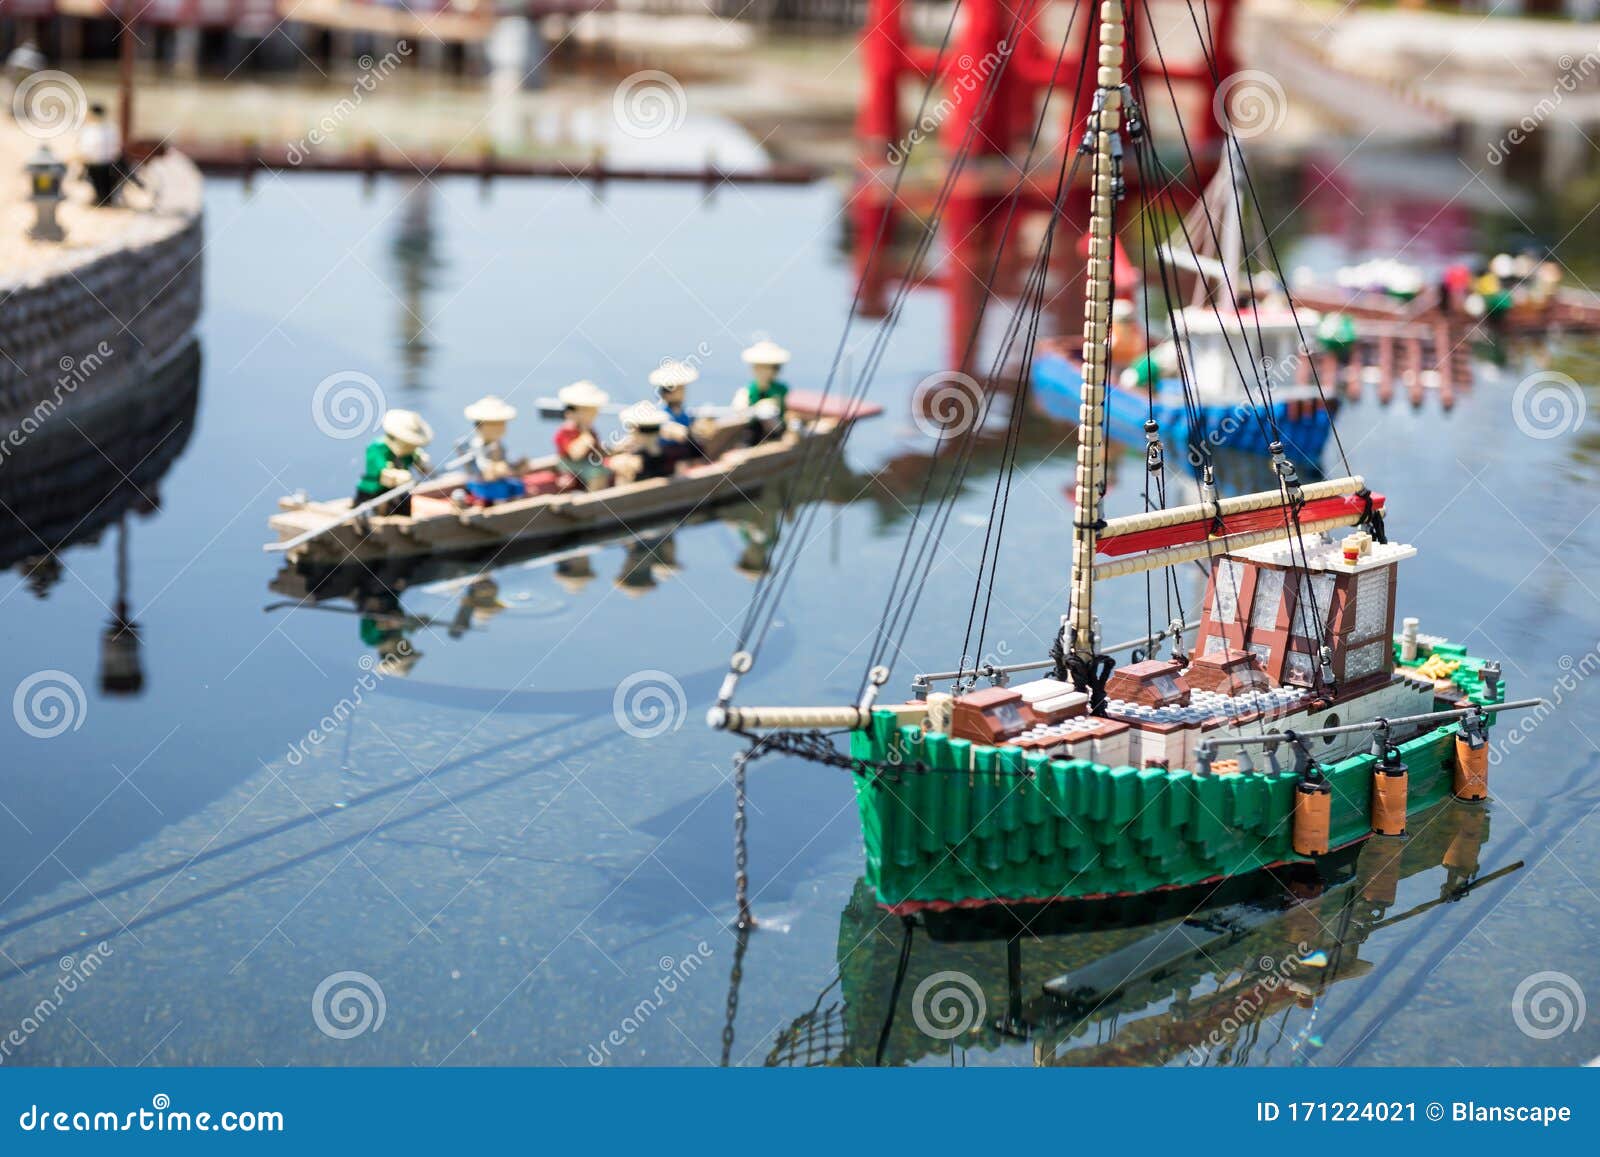 Lego Fishing and Transportation Boat, Nagoya Editorial Photo